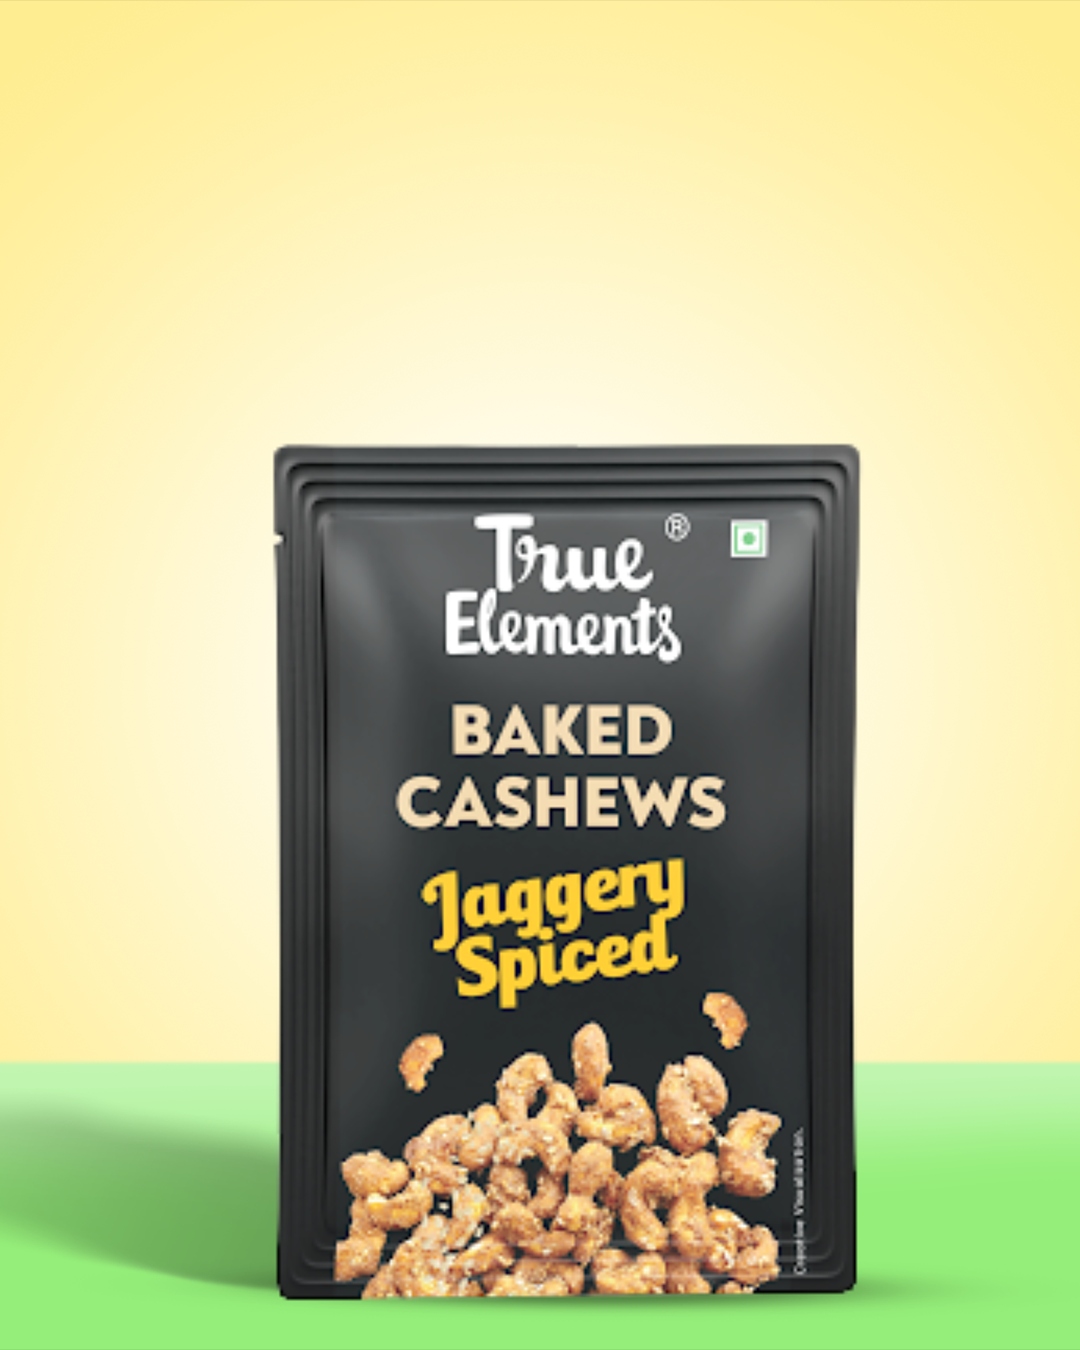 True Elements Baked Cashews Jaggery Spiced